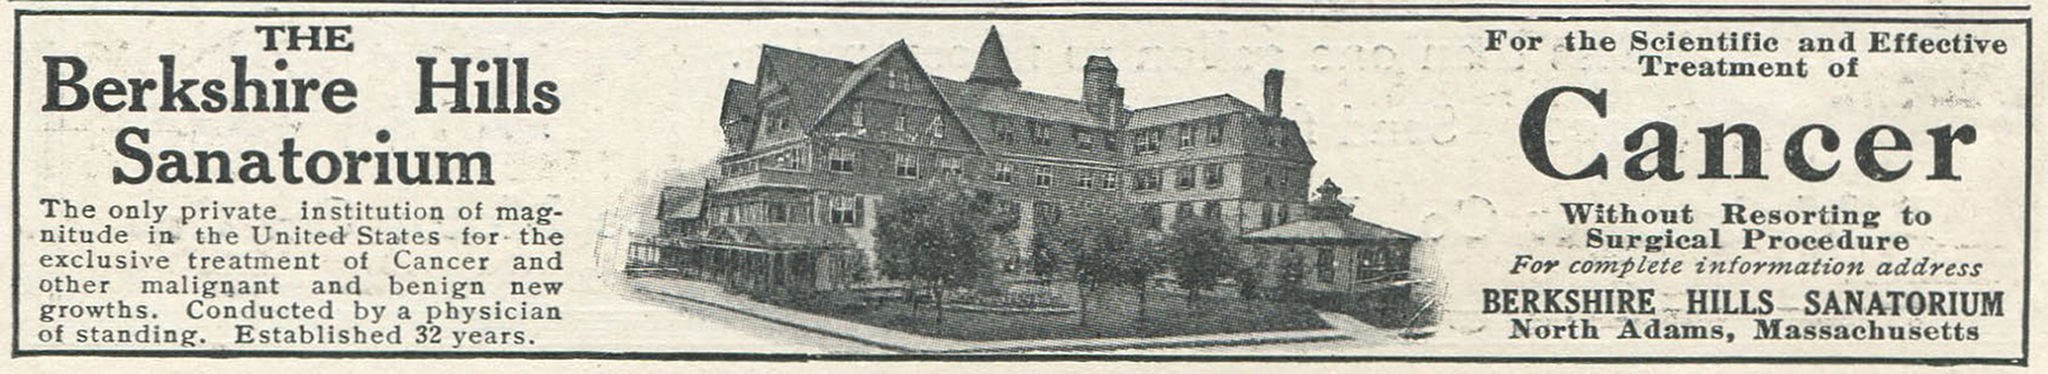 The Waverly Hills Sanatorium, 